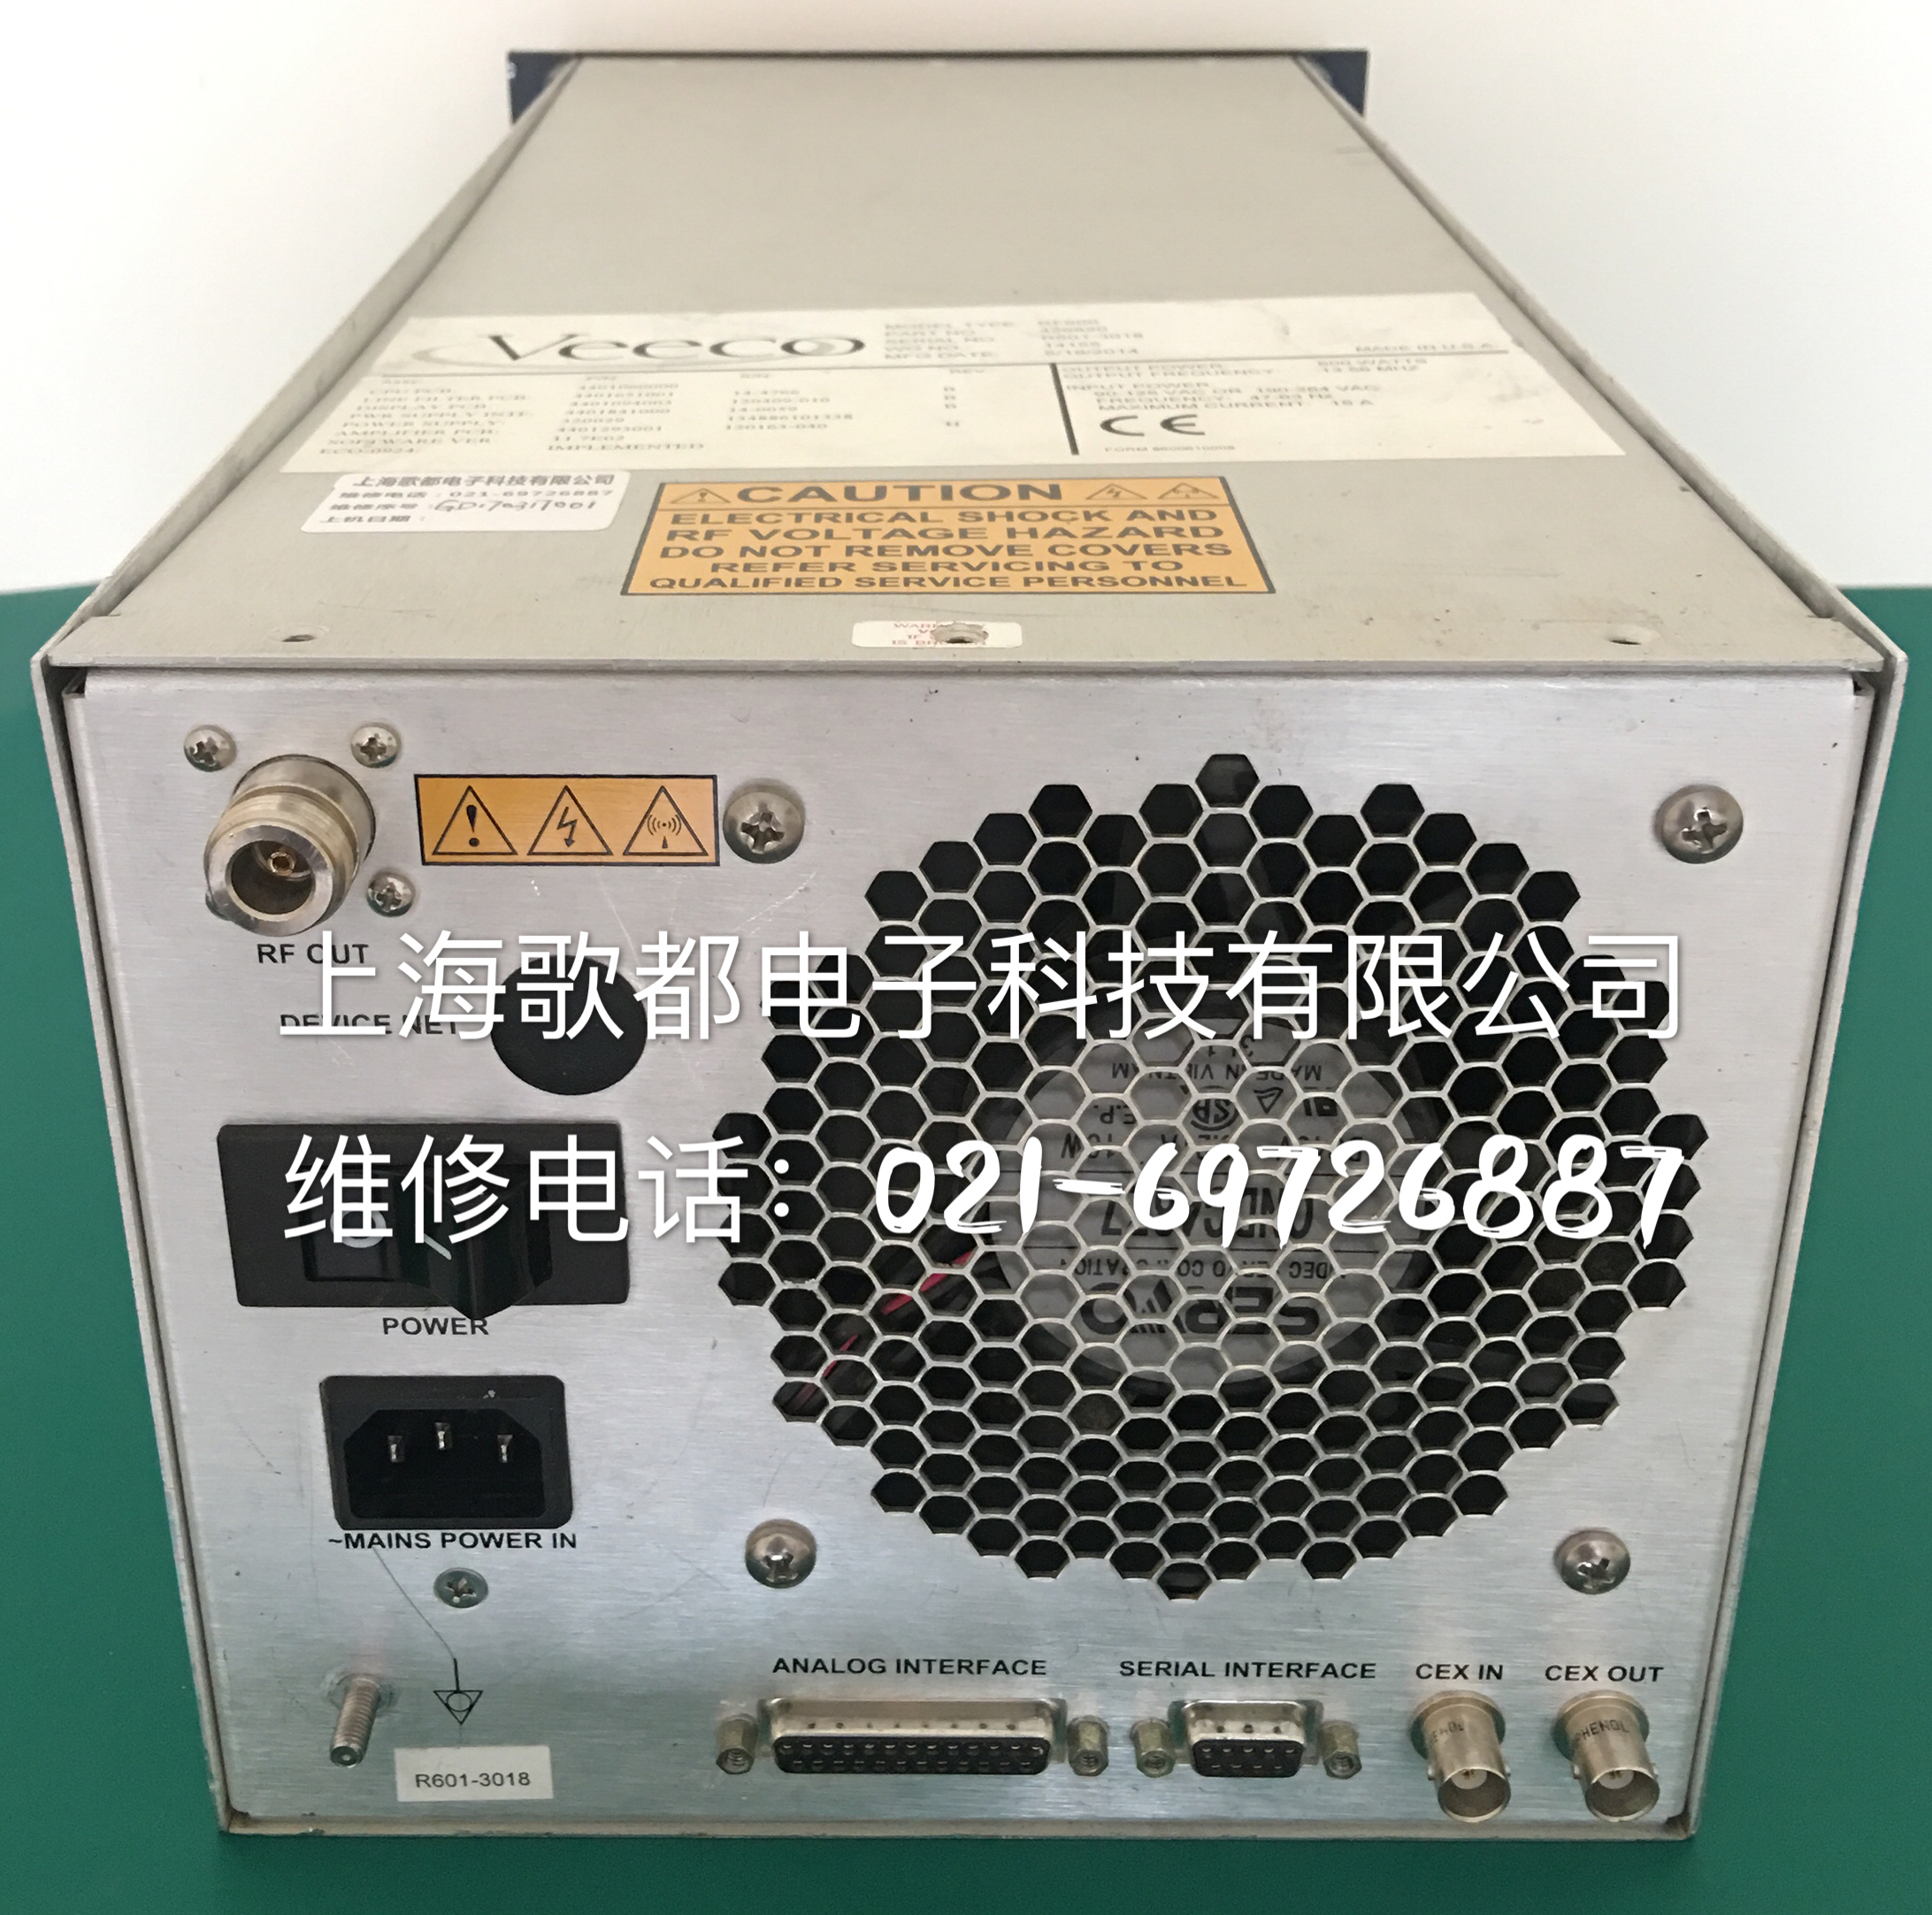 VEECO RF600 R601-3018，13.56MHZ(600W射频电源专业维修